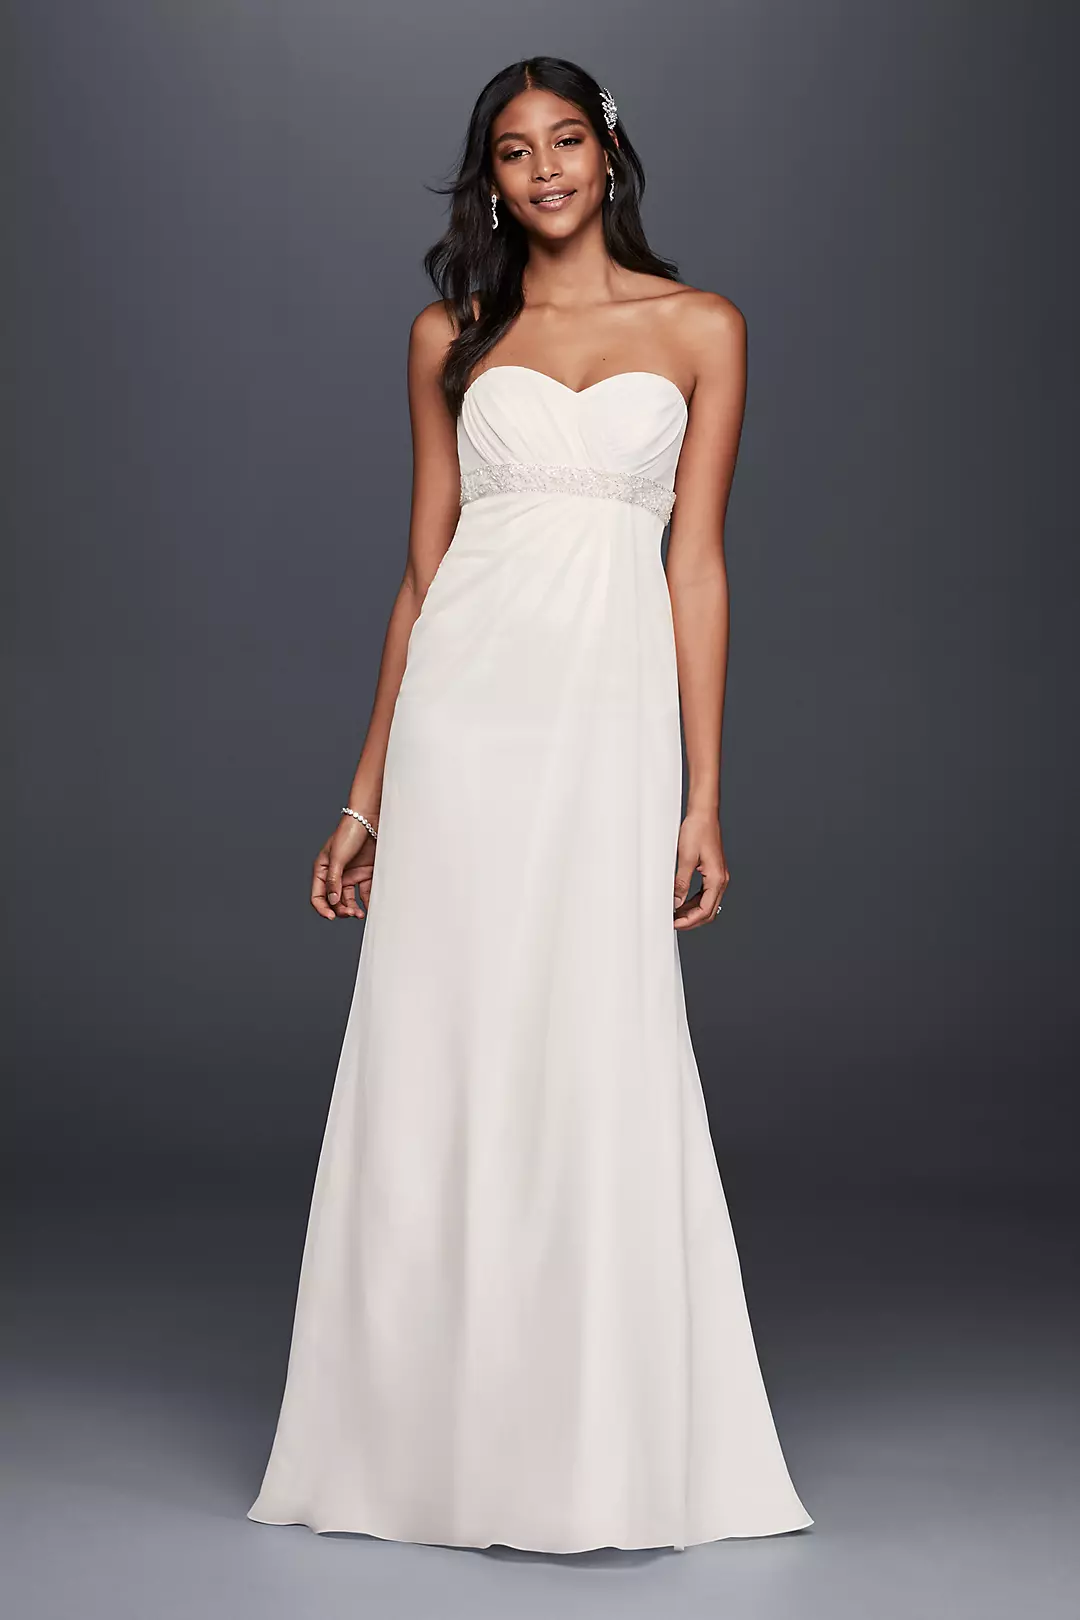 A-Line Wedding Dress with Beaded Empire Waist Image